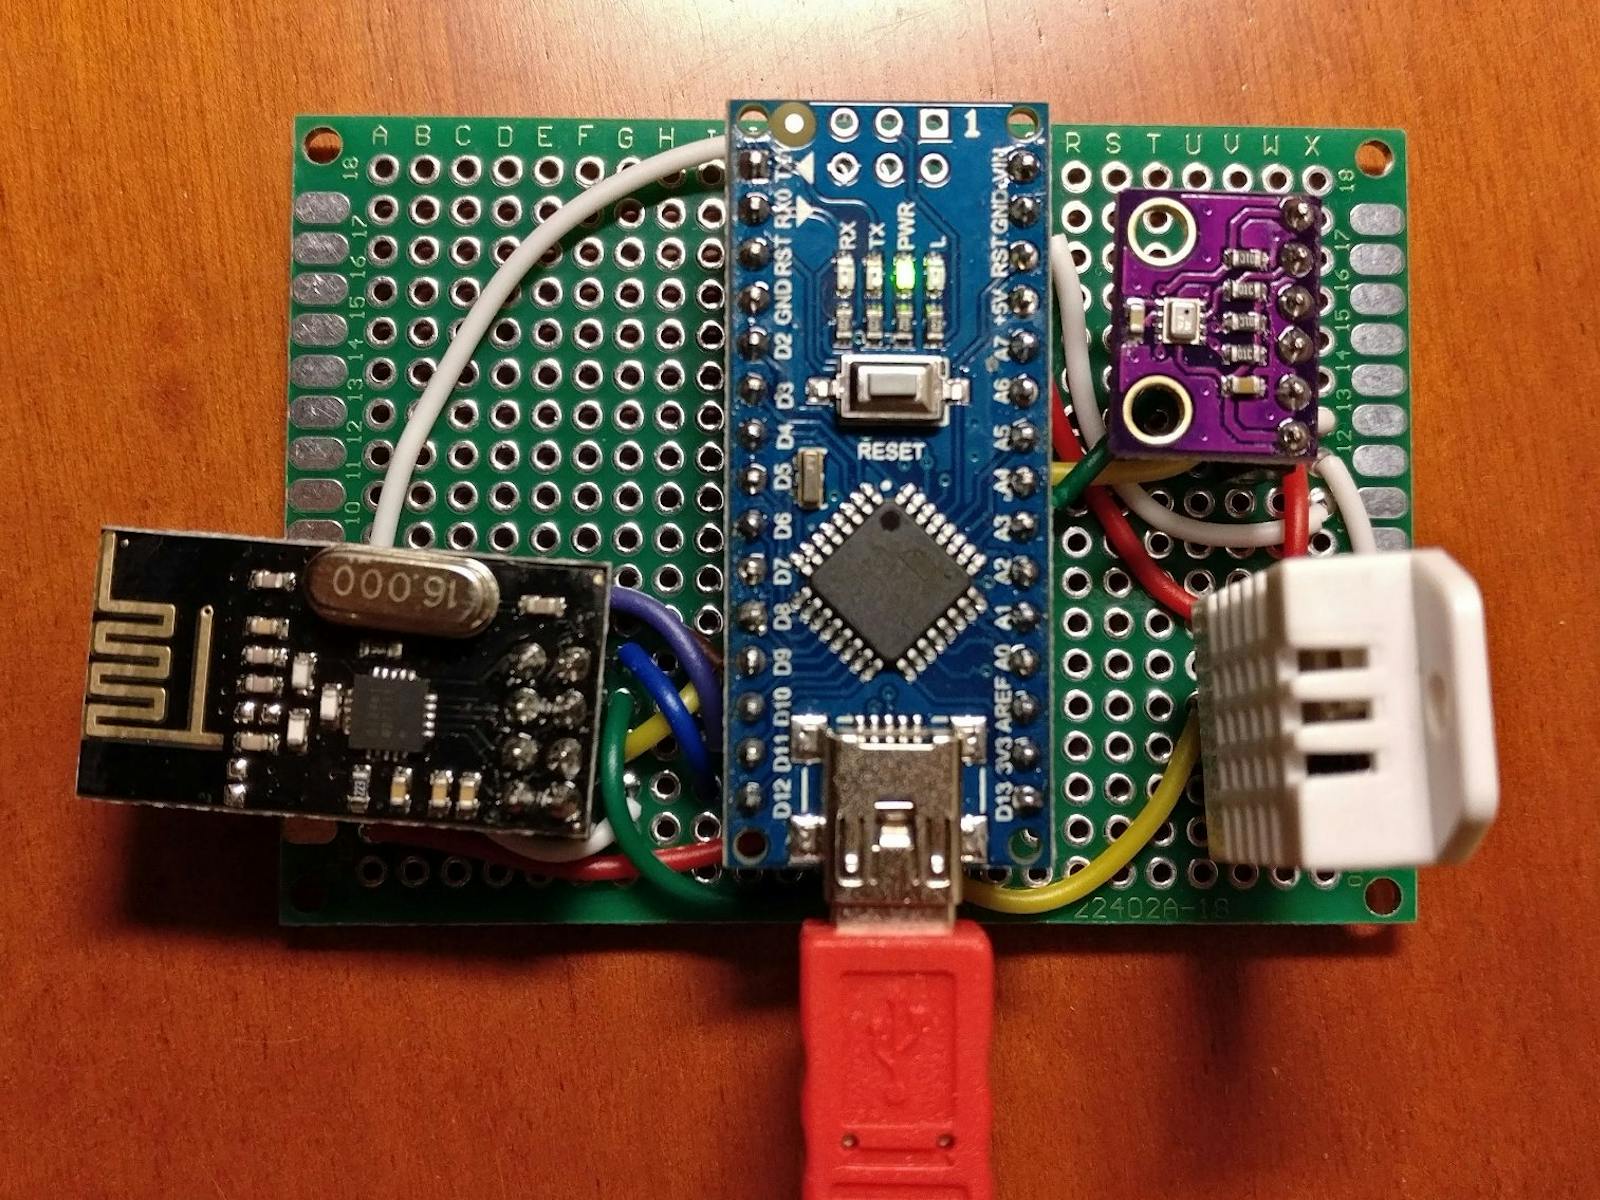 NRF24L01 and Arduino Nano based Wireless Industrial Temperature